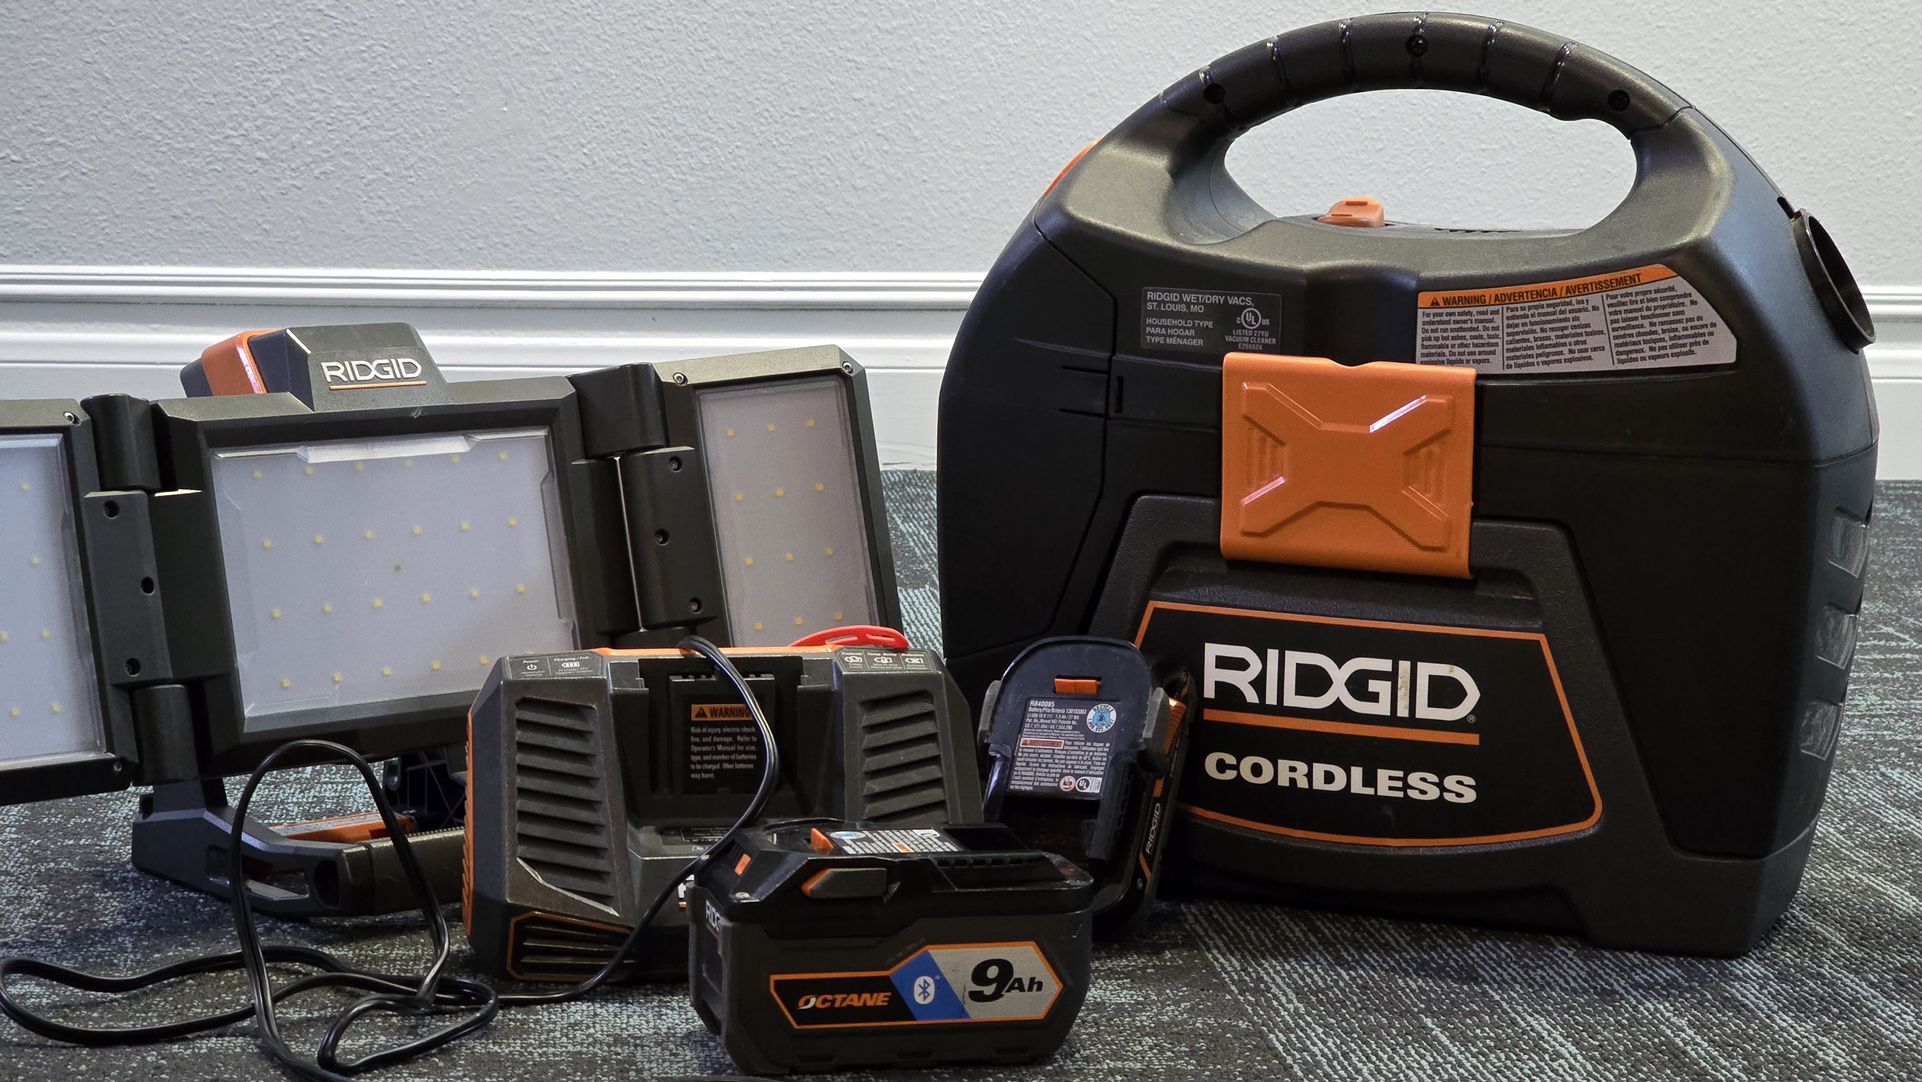 Rigid Power Tools Set Vacuum; 9Ah Battery And Light